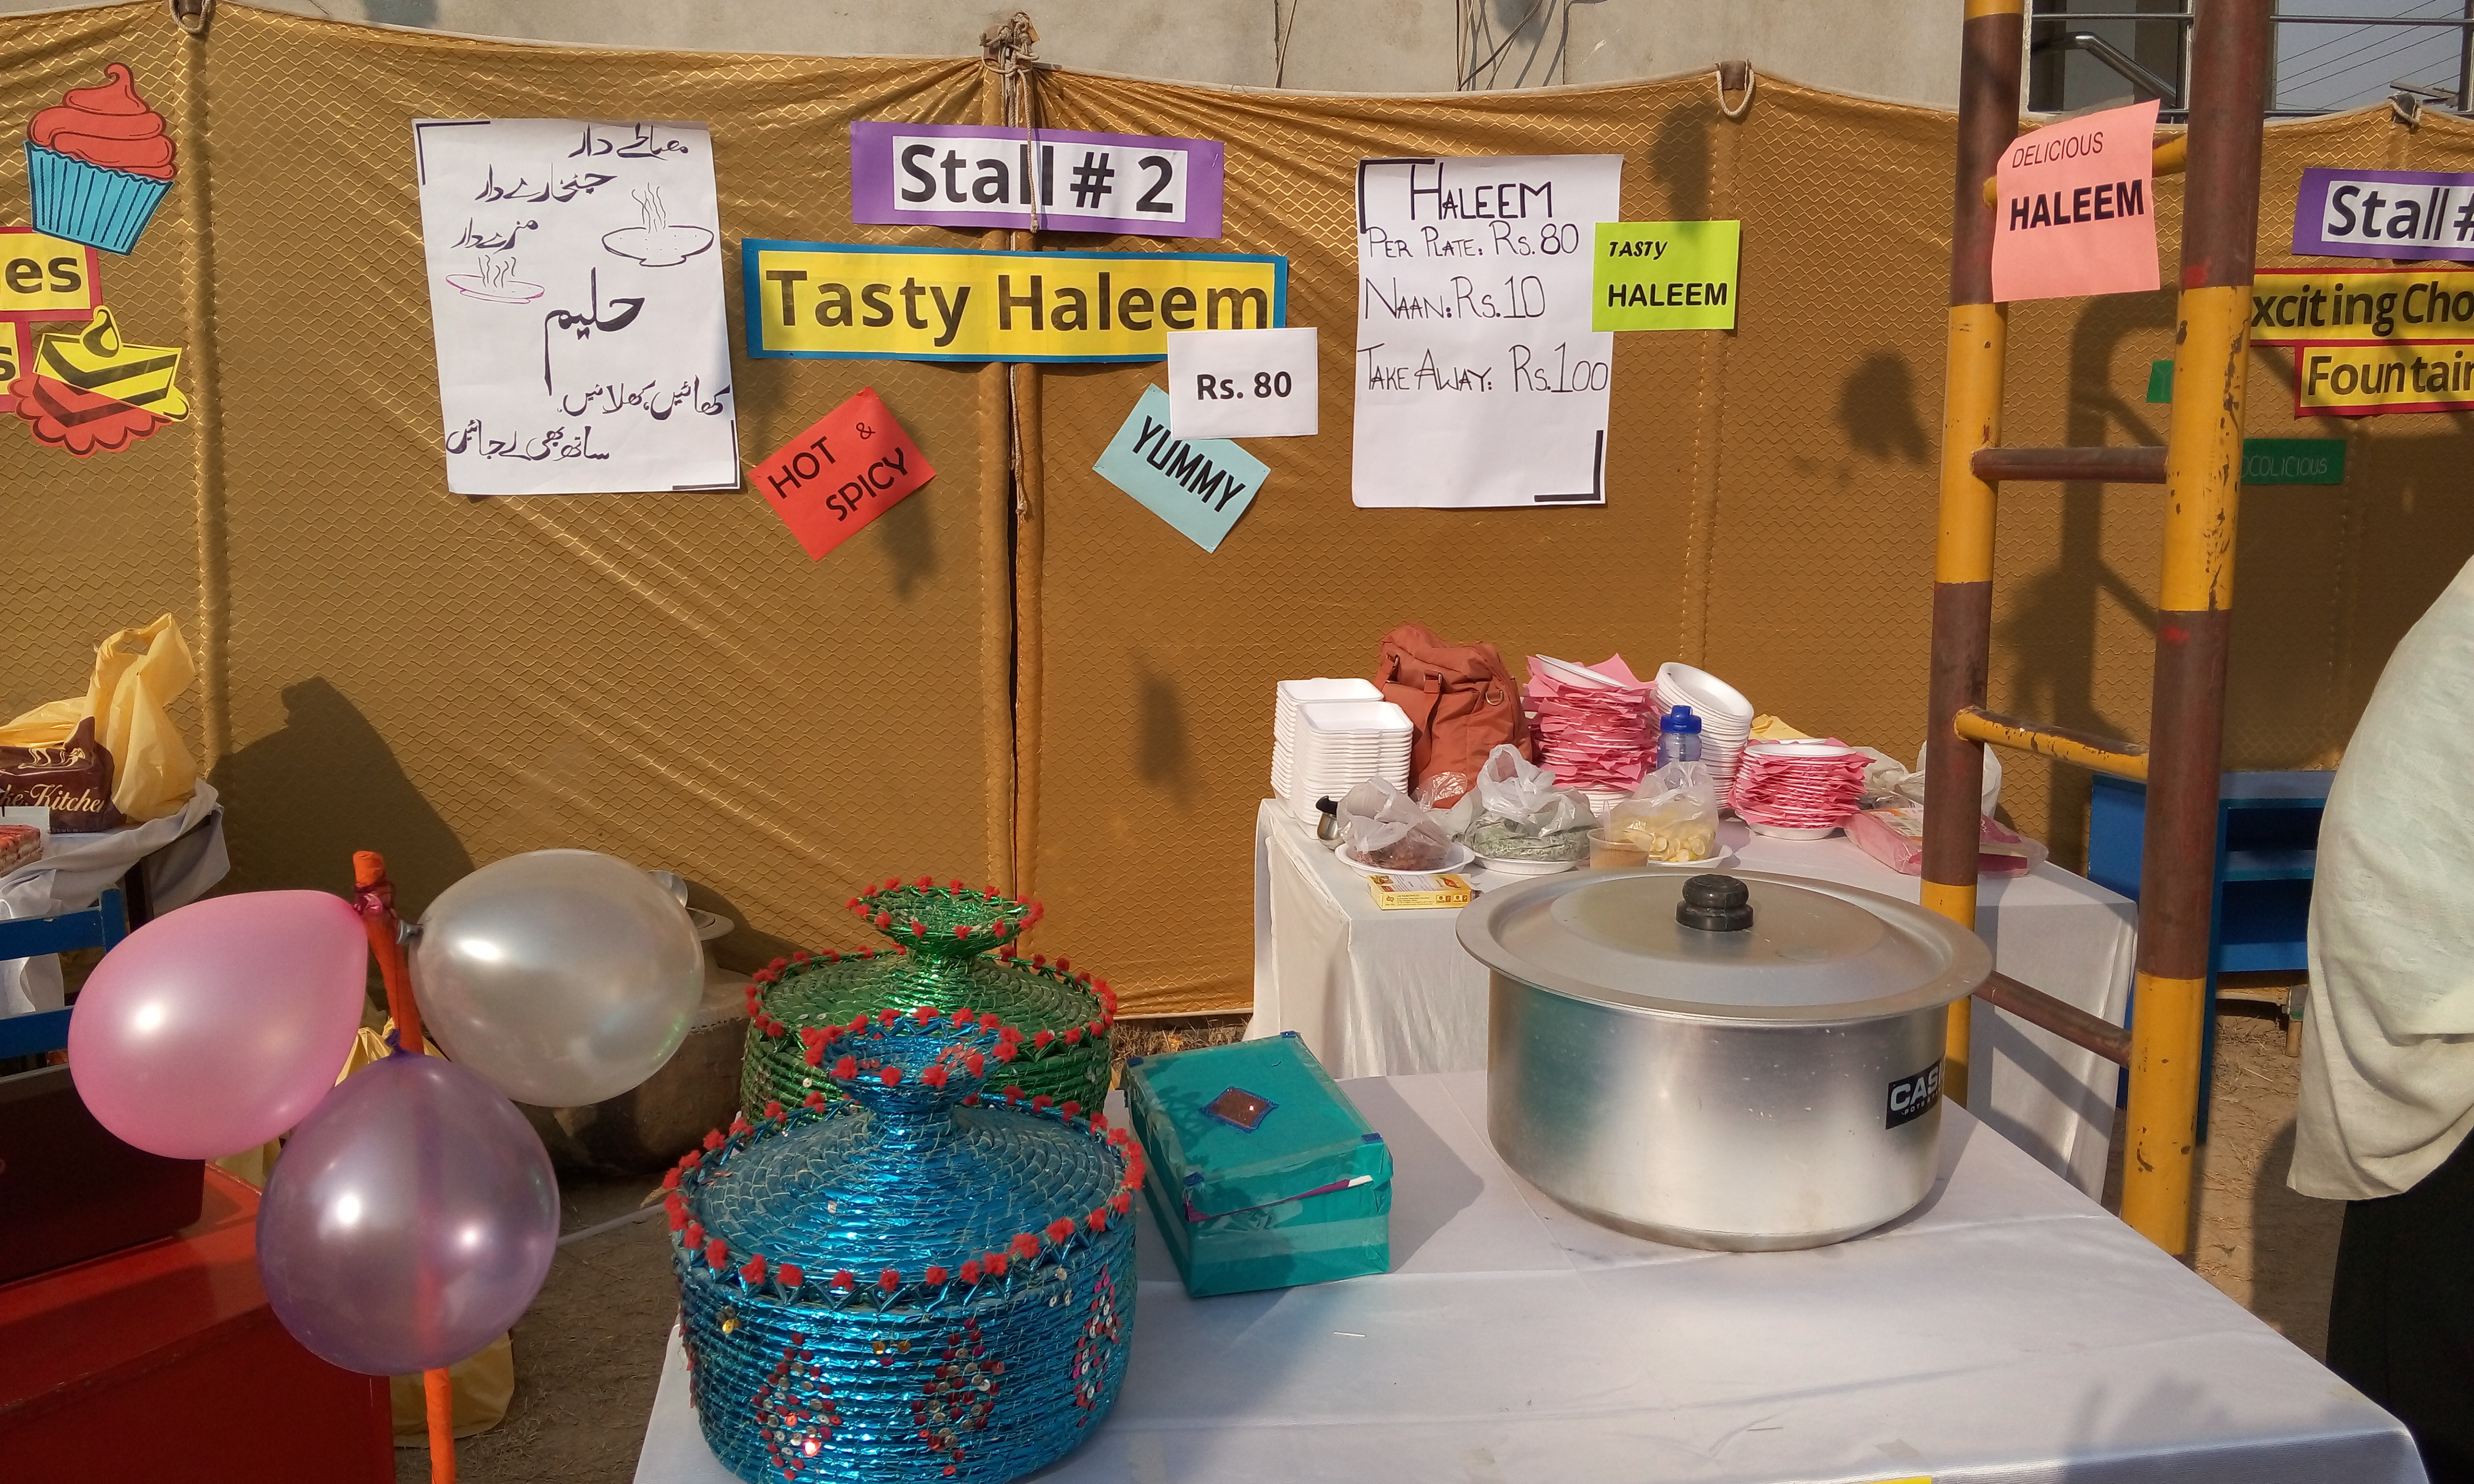 Stall 2 - Tasty Haleem